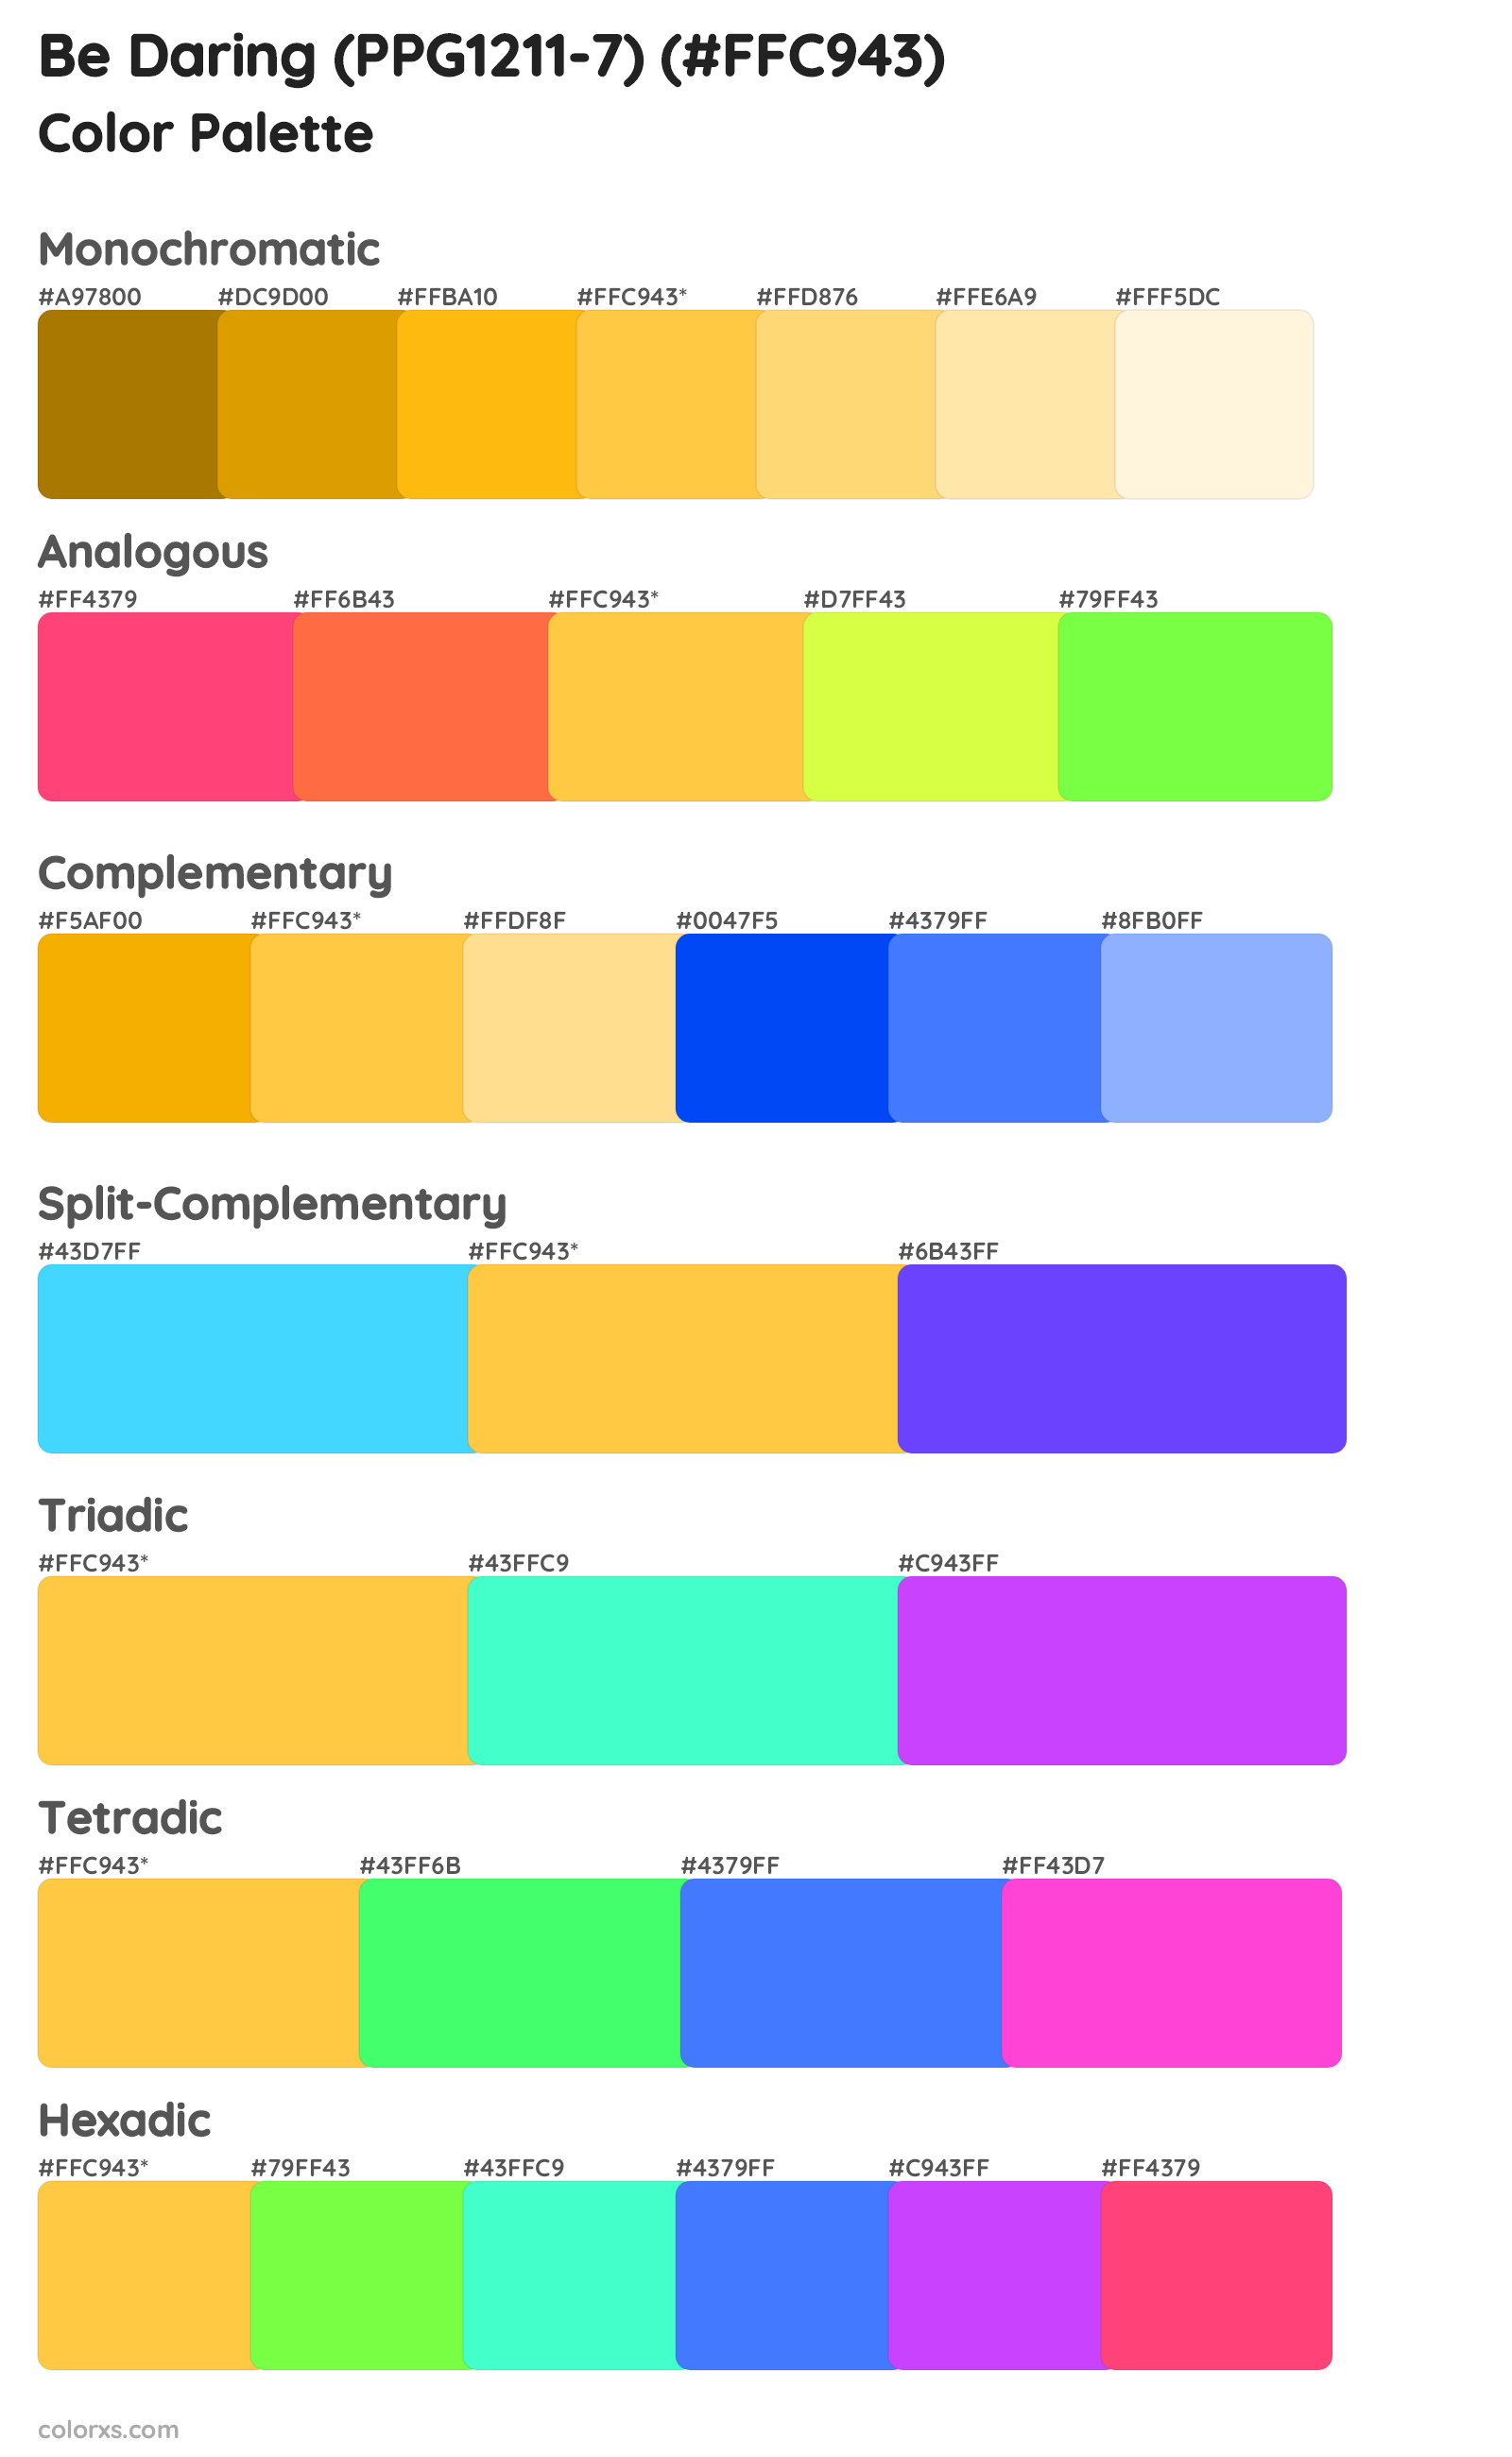 Be Daring (PPG1211-7) Color Scheme Palettes